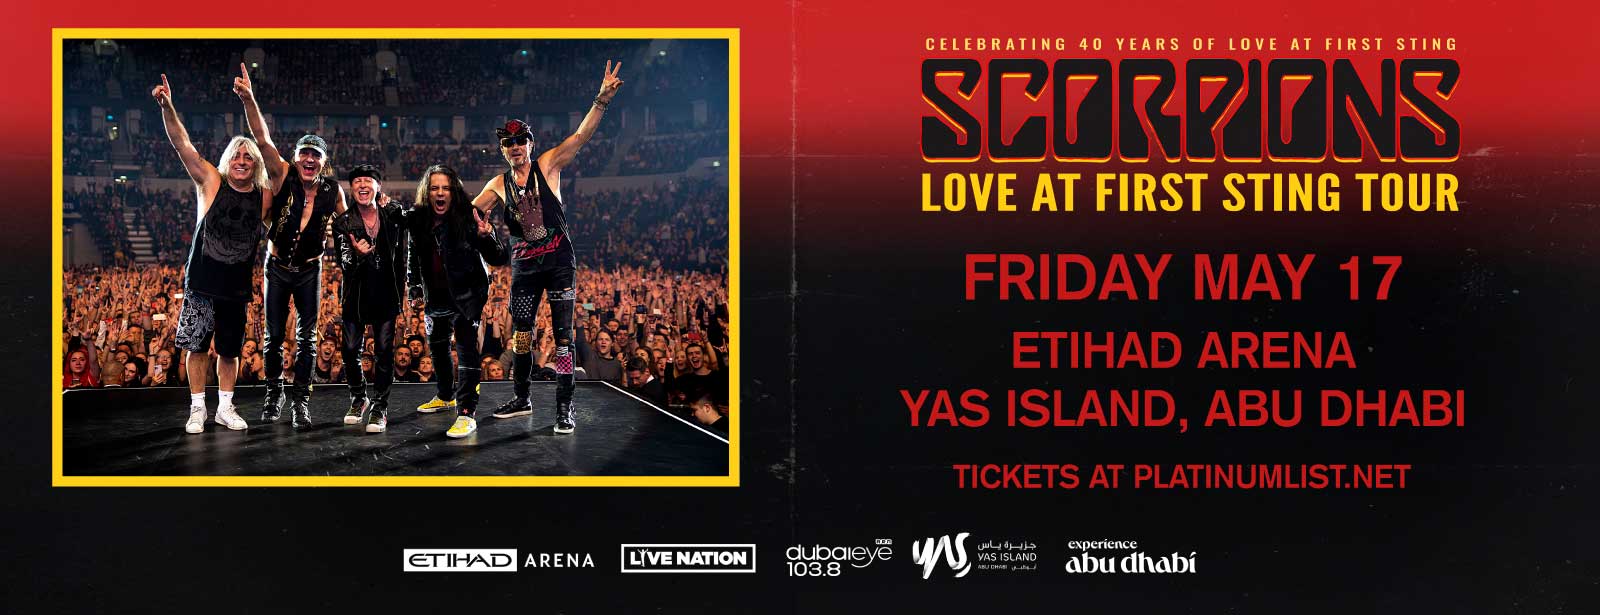 Scorpions Live at Etihad Arena, Abu Dhabi - Coming Soon in UAE